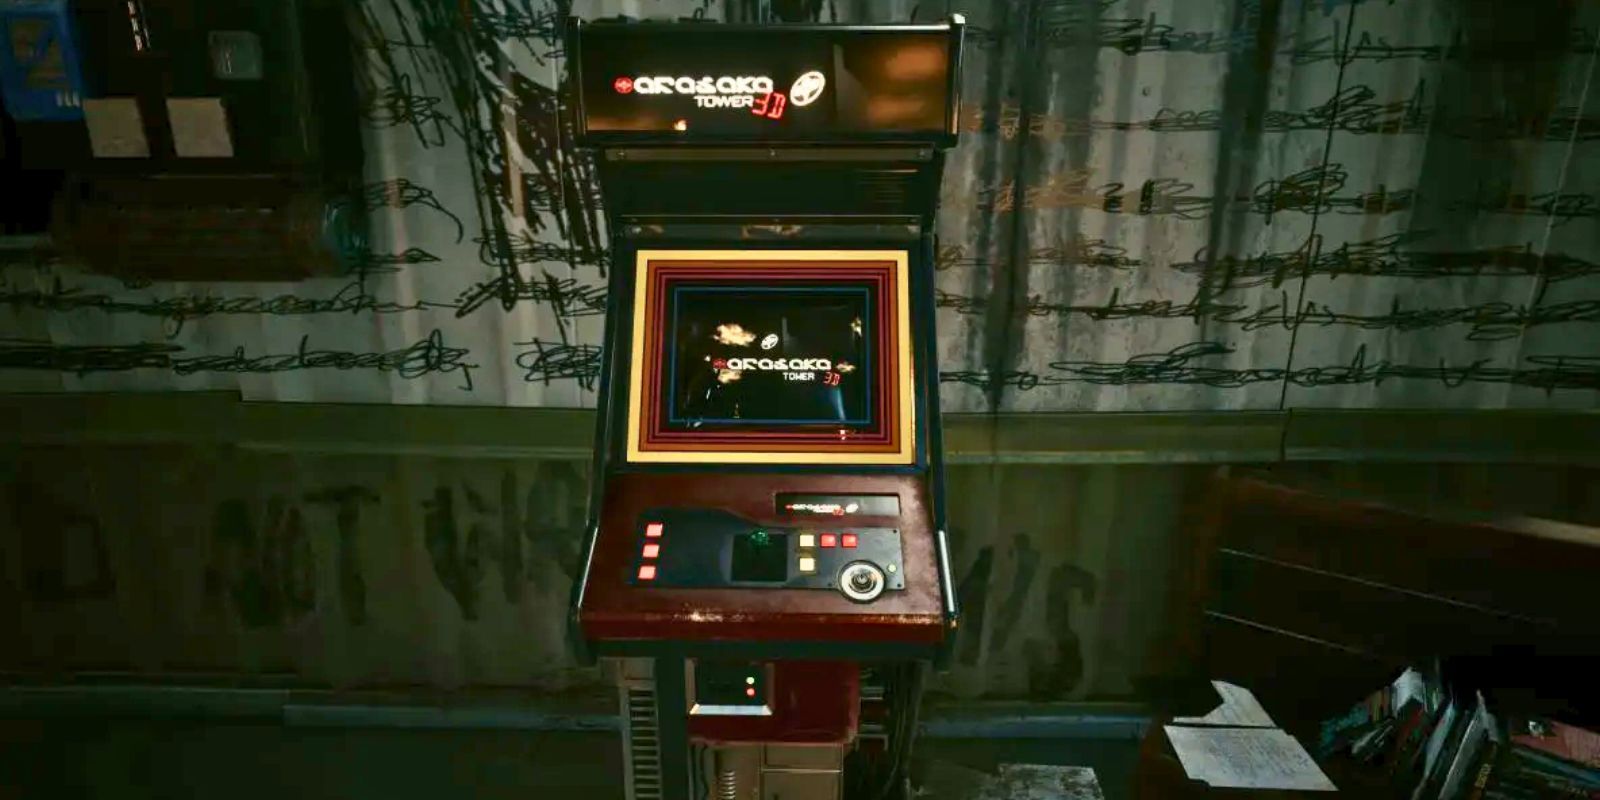 Arasaka Tower 3D arcade game in Cyberpunk 2077